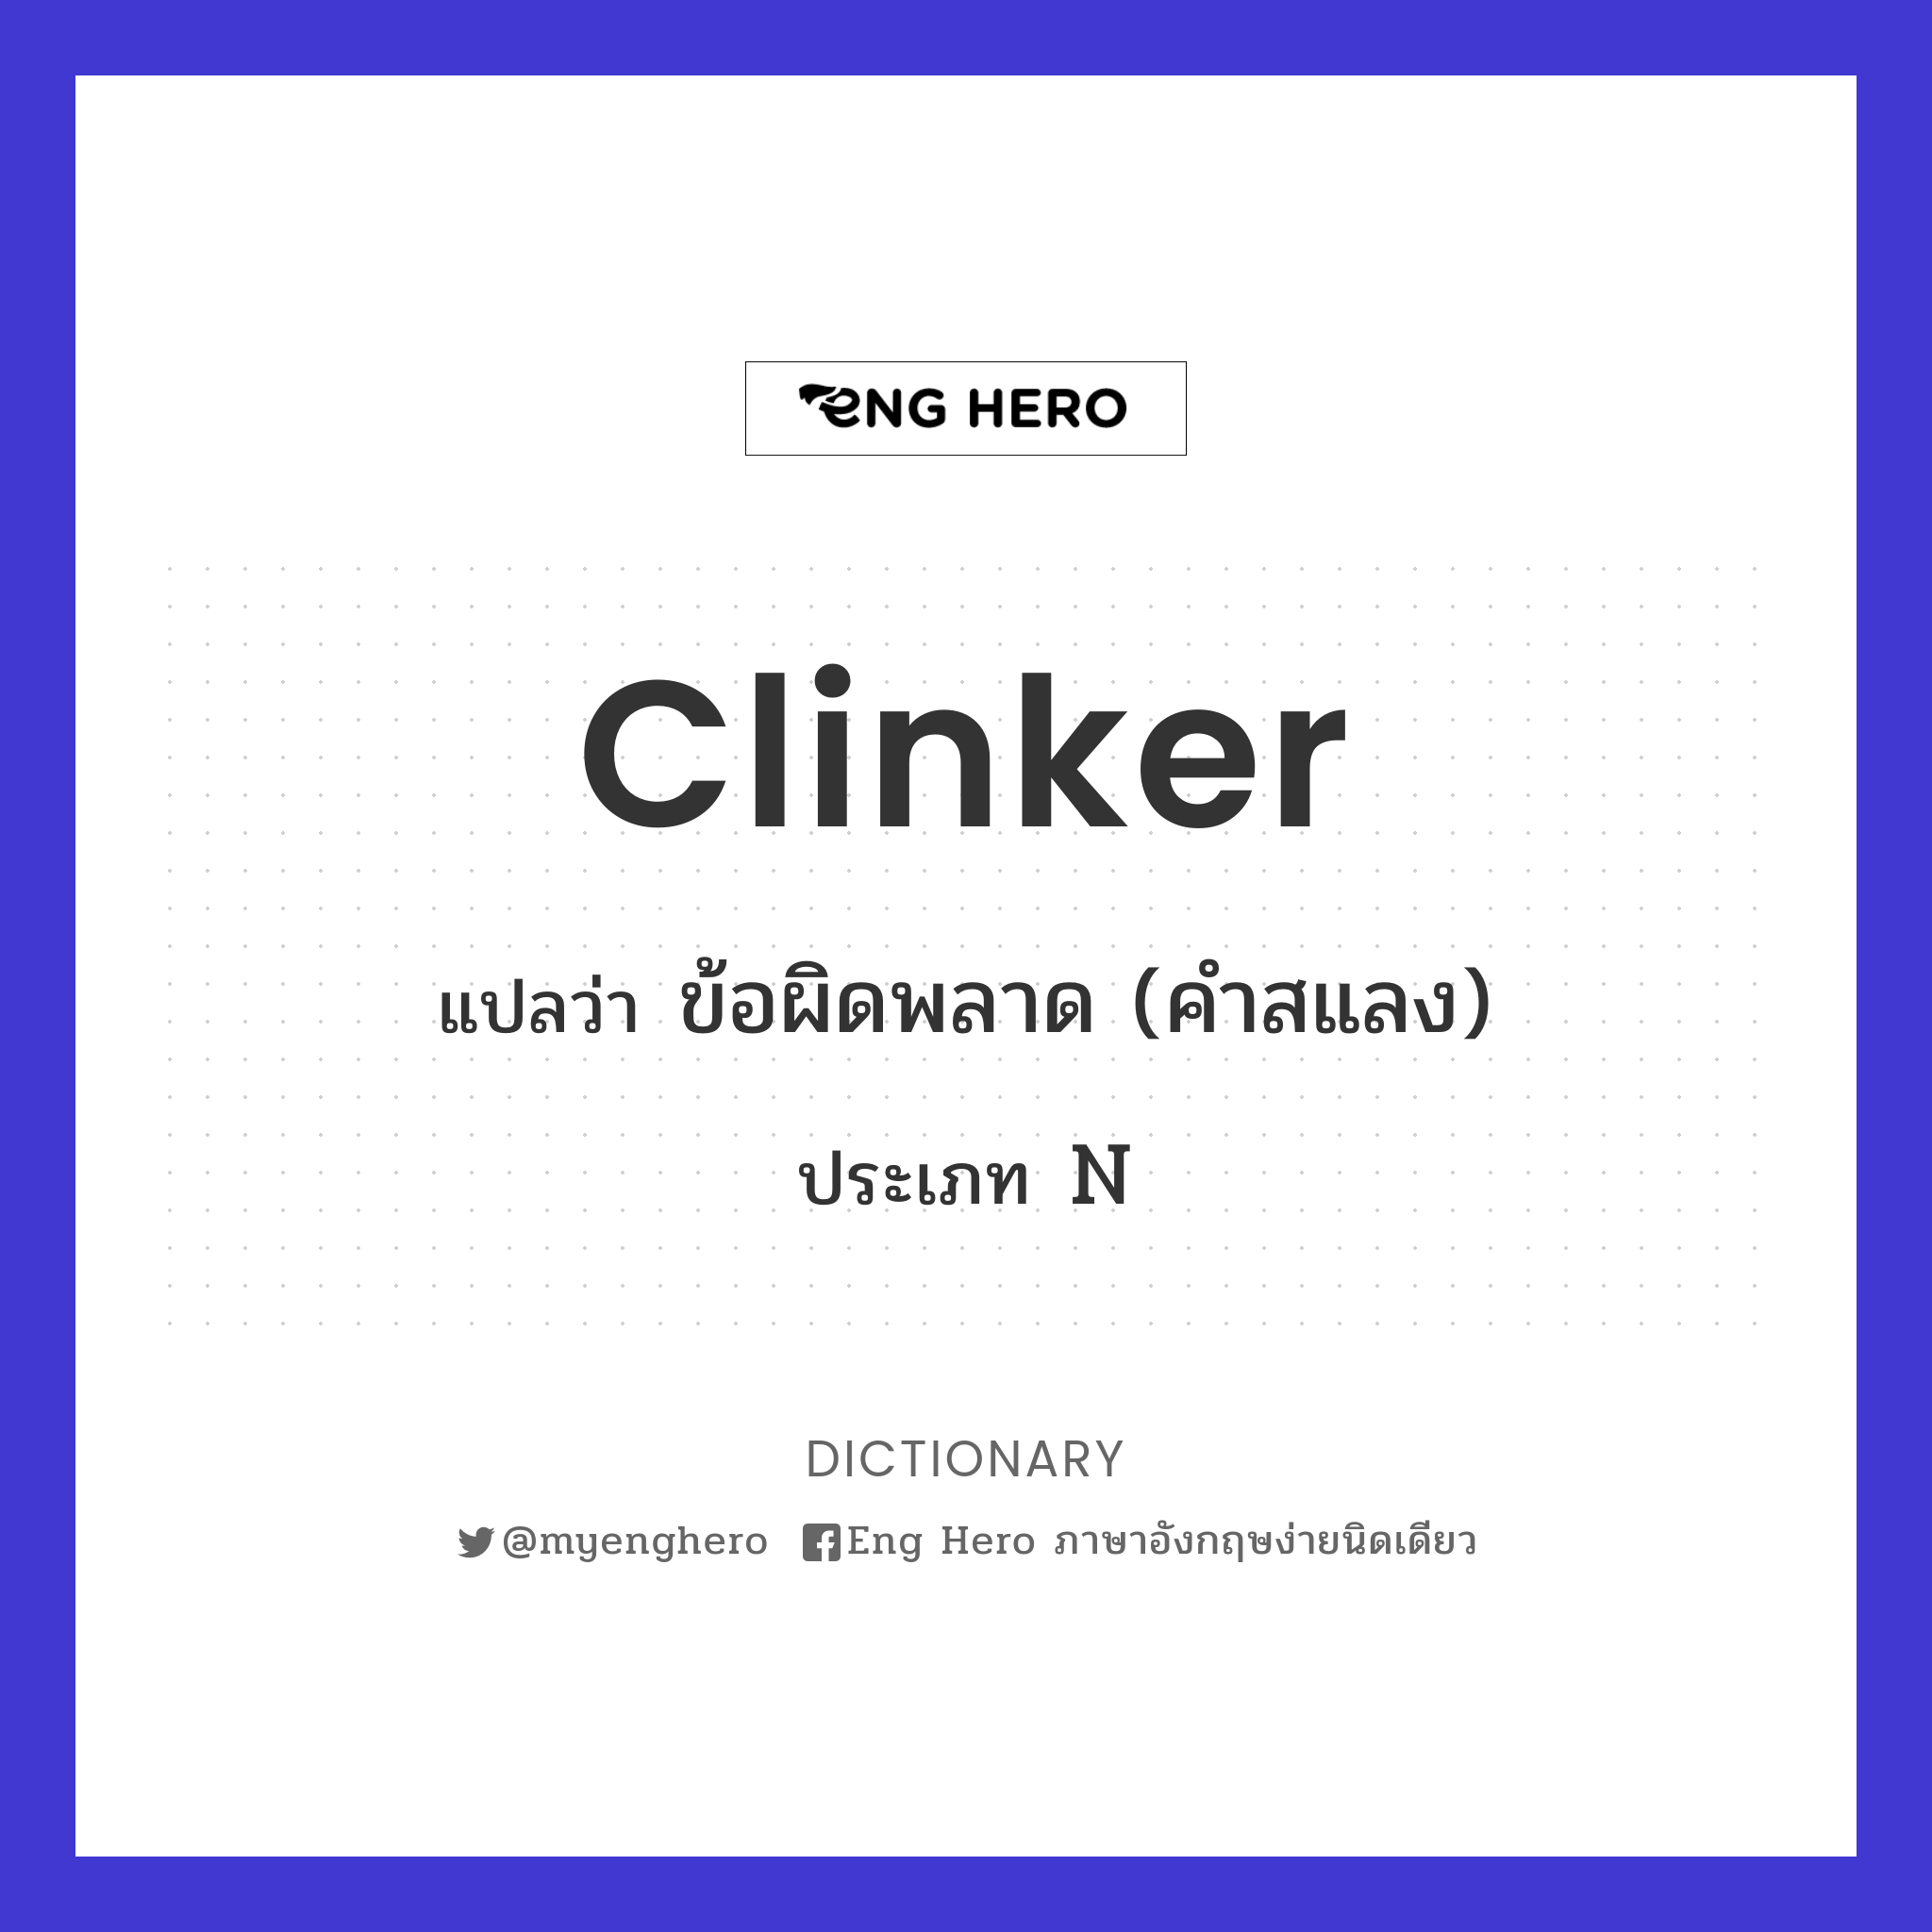 clinker